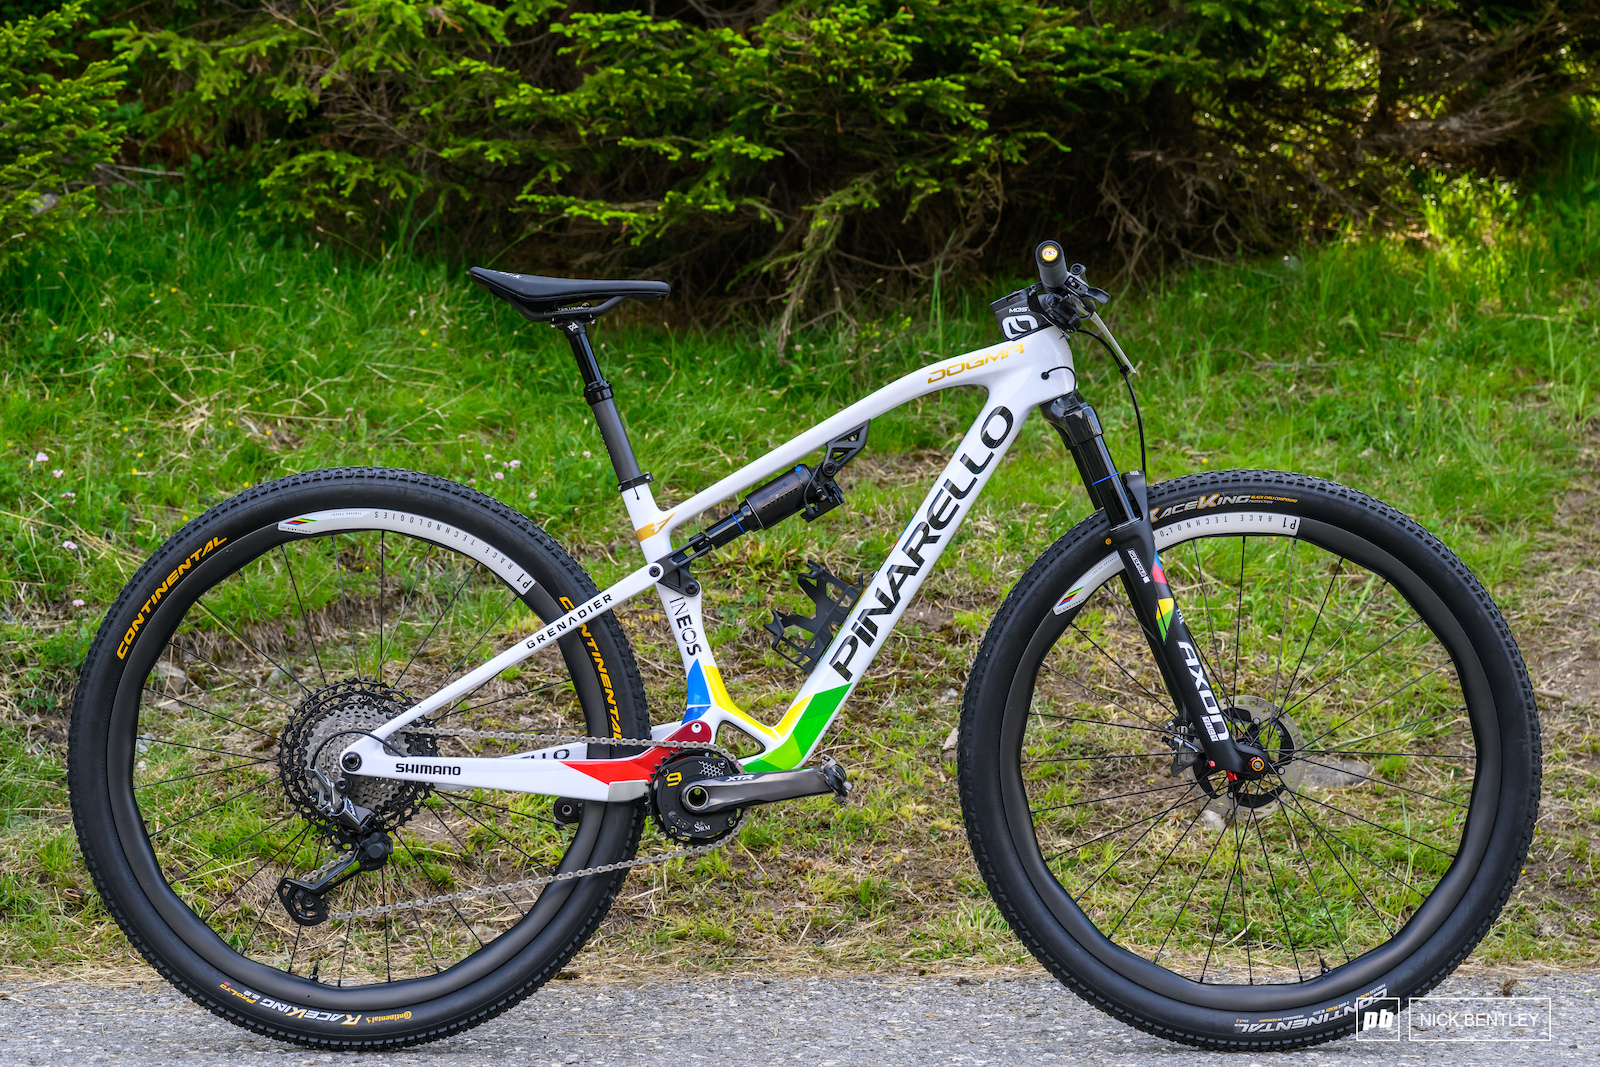 Pinarello Dogma XC mountain bike breaks cover